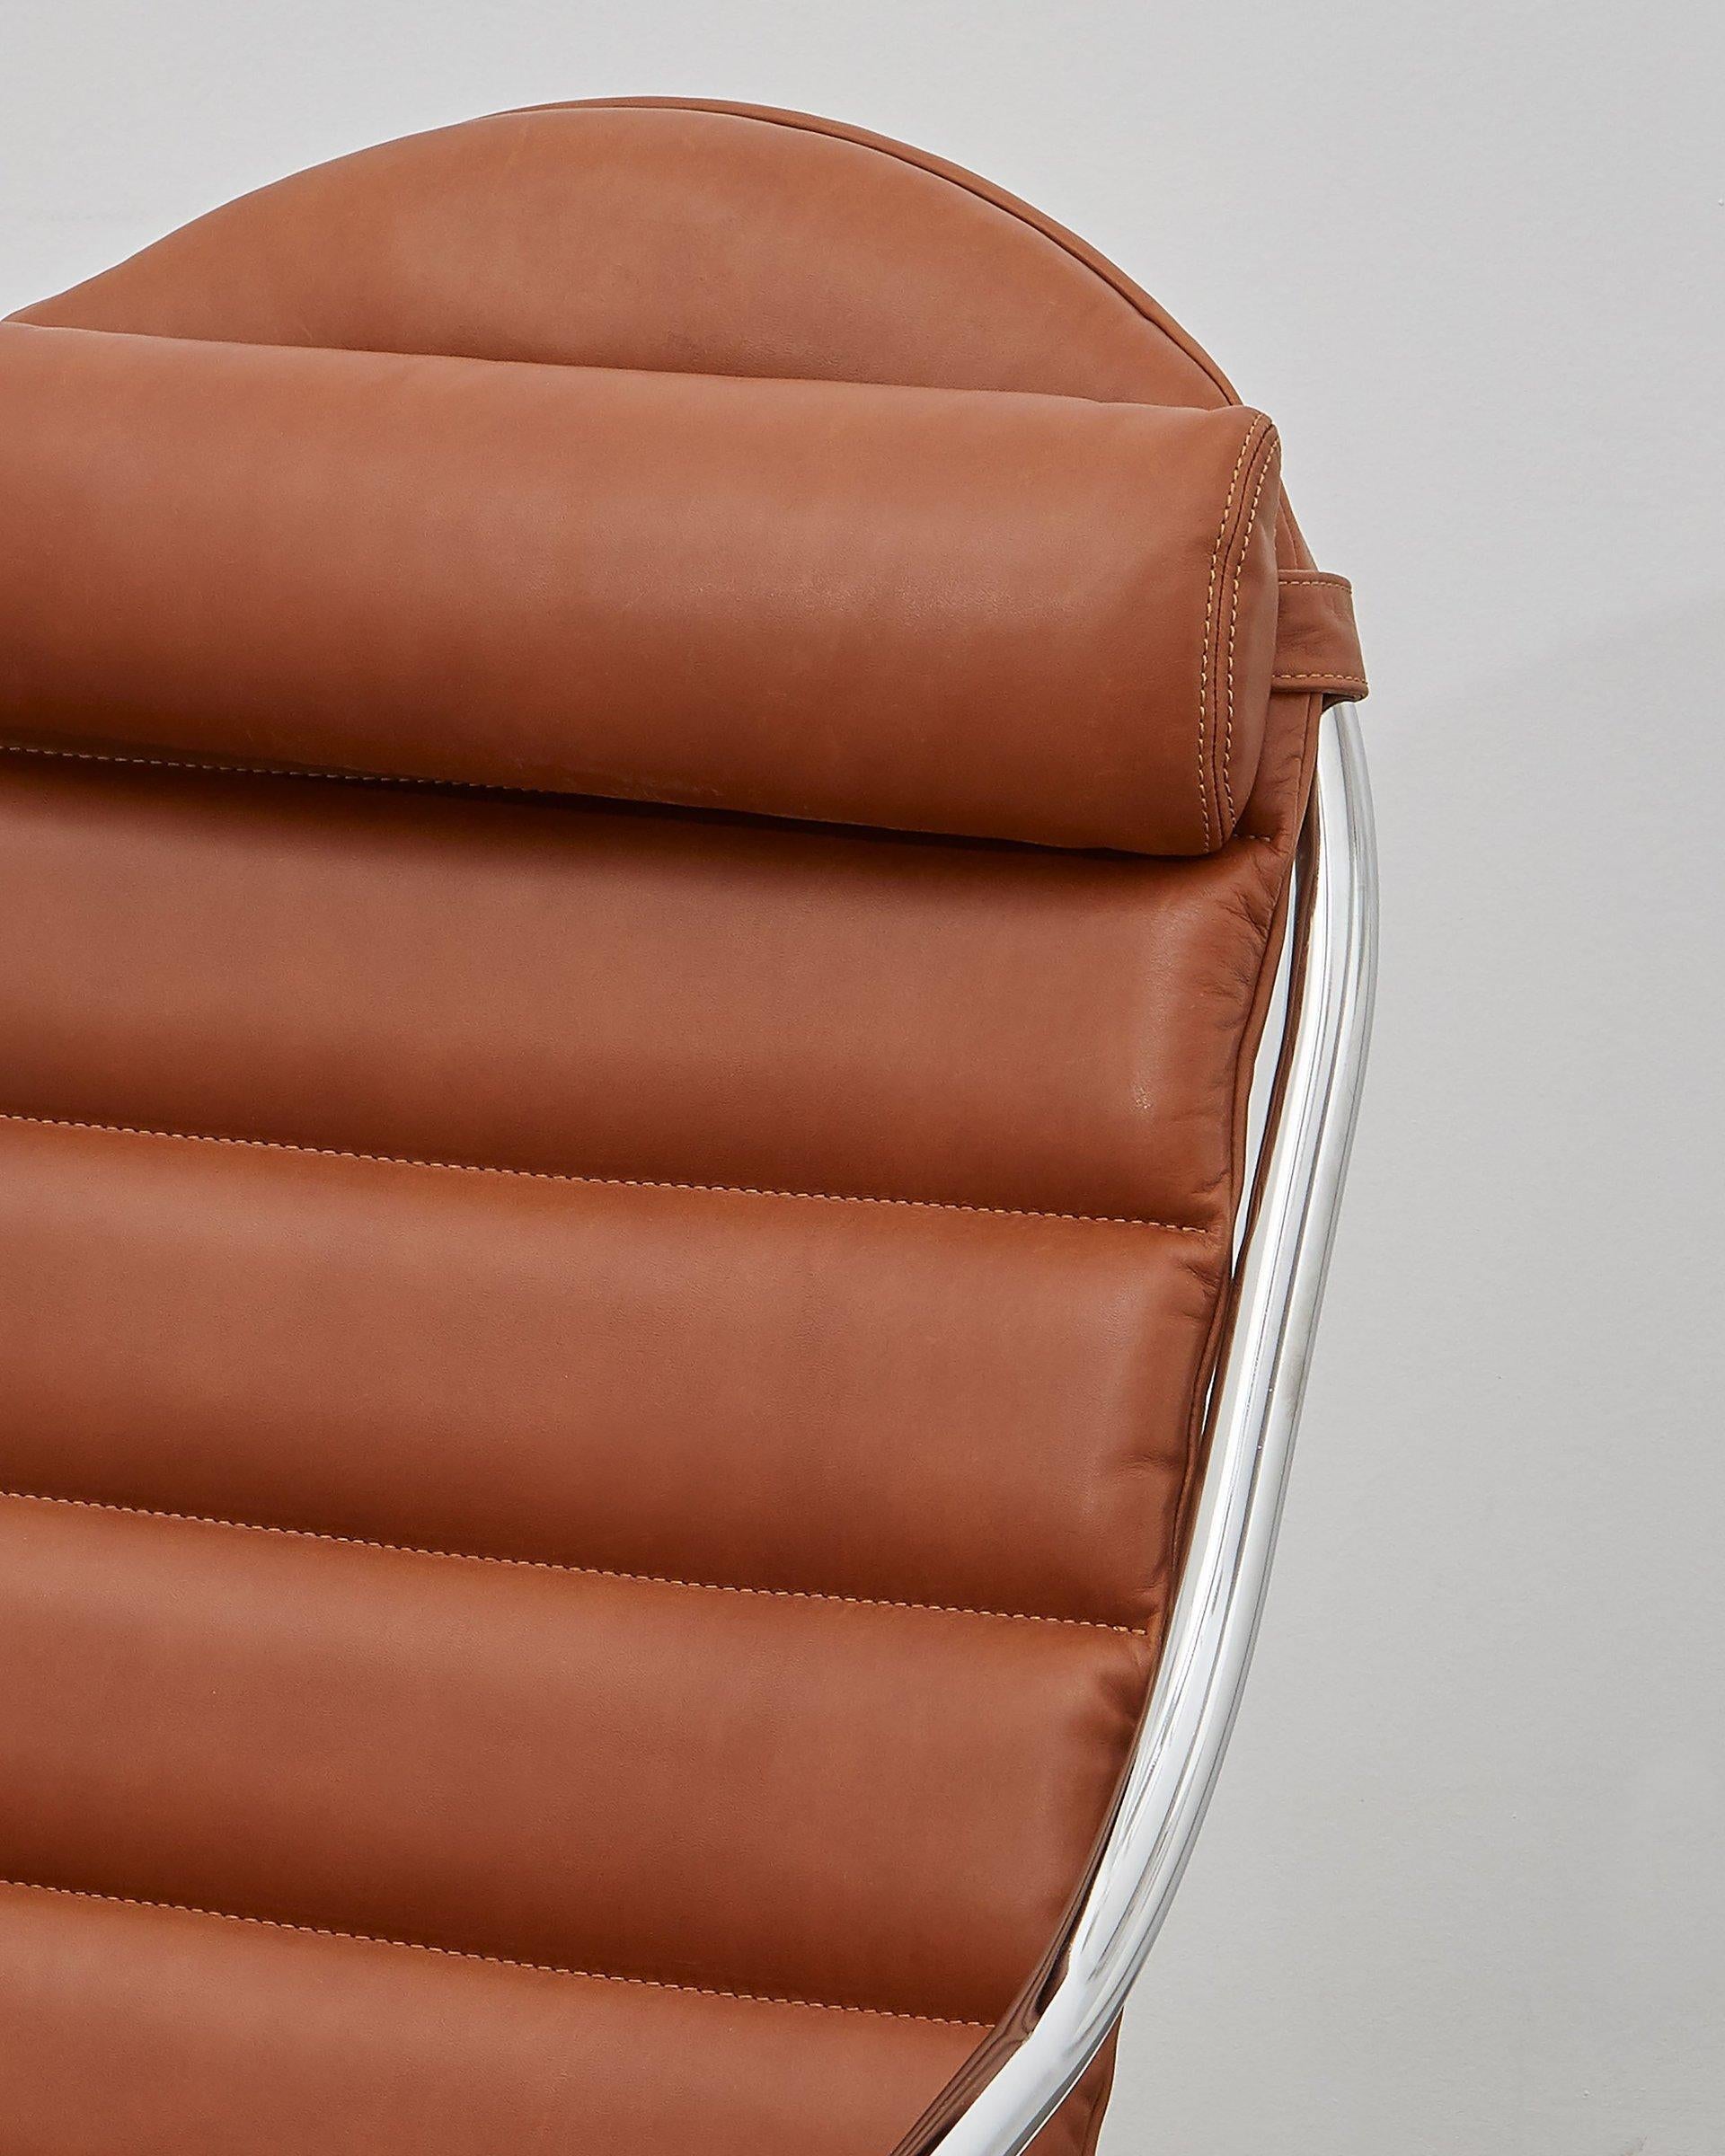 Bauhaus PH Lounge Chair, chrome, leather extreme walnut For Sale